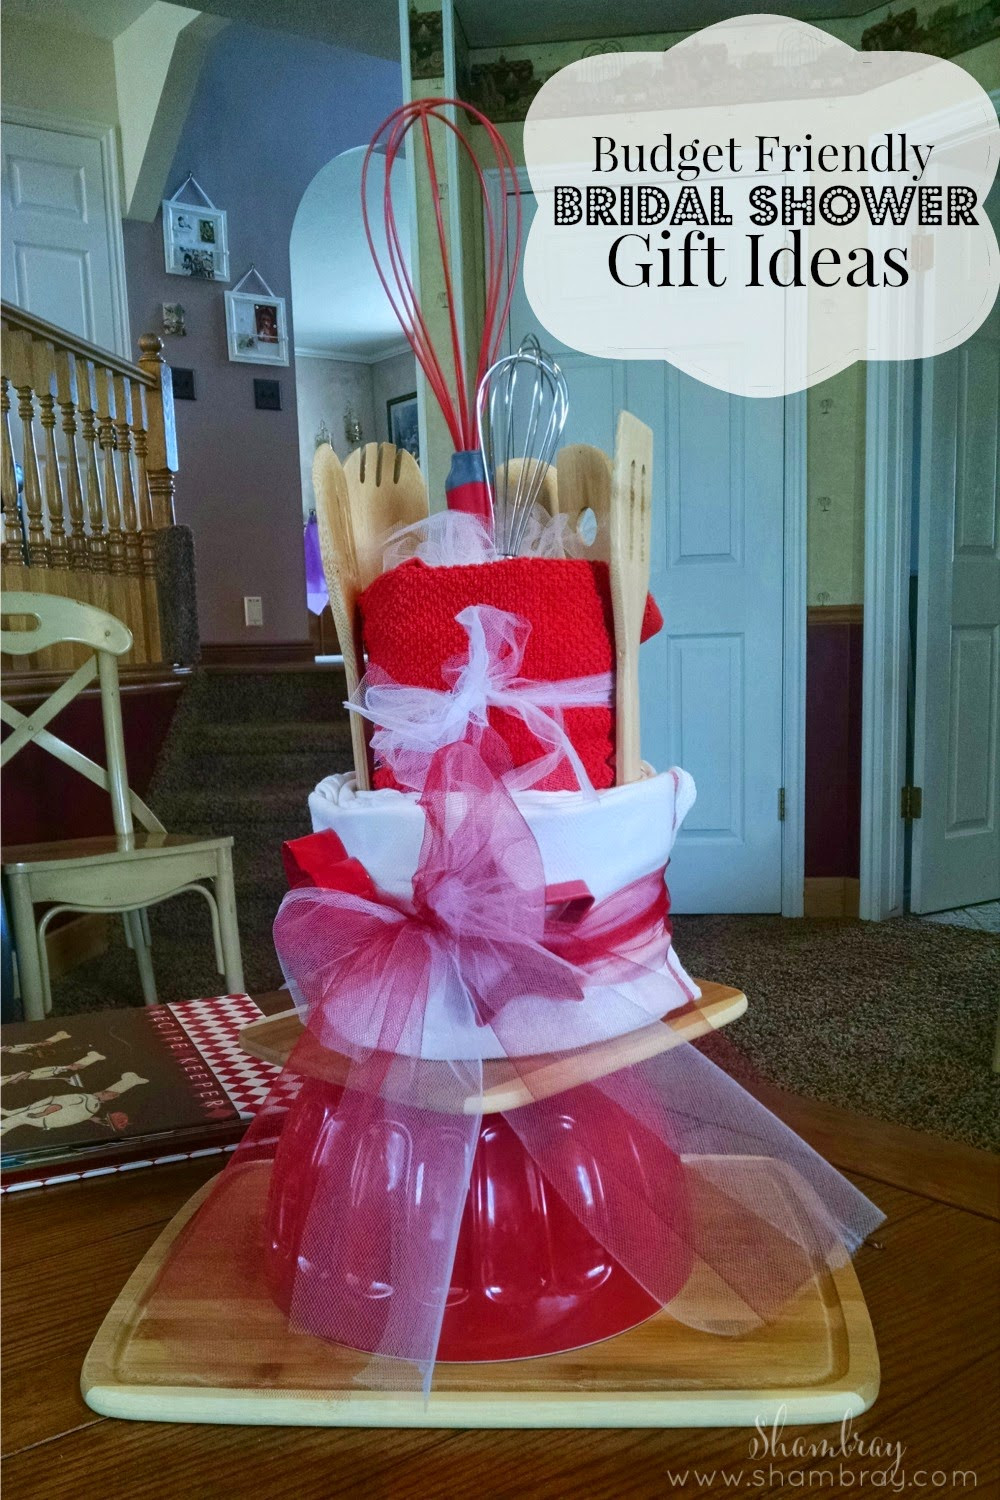 Wedding Gift Ideas For Bride
 Shambray Bud Friendly Bridal Shower Gift Ideas